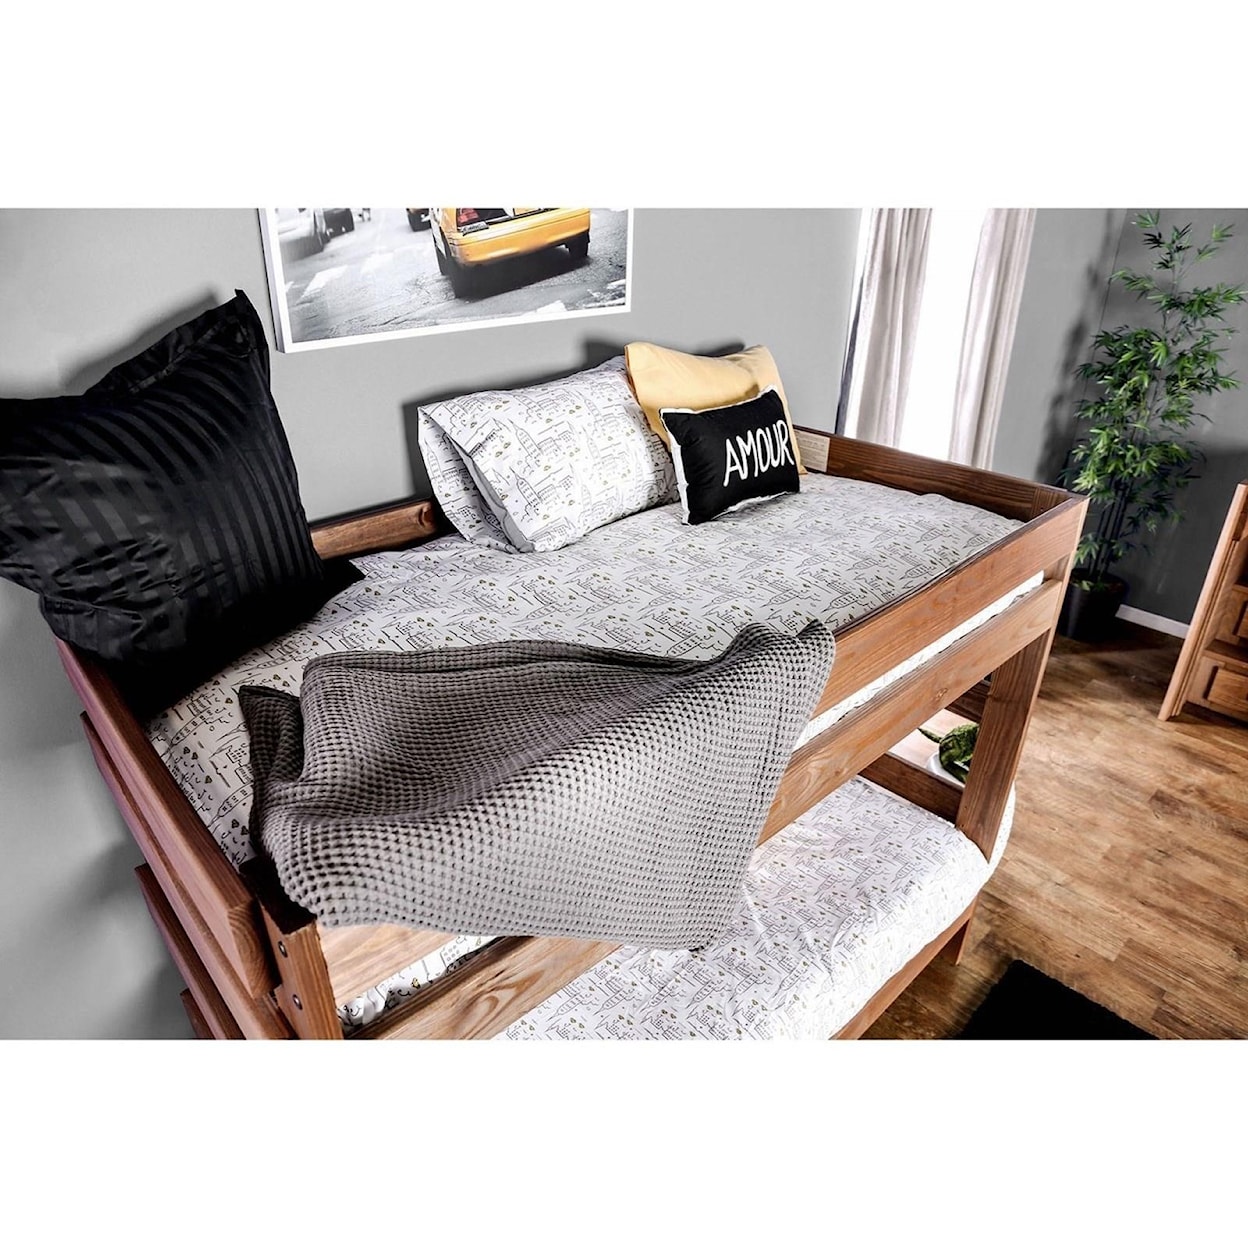 FUSA Arlette Twin/Twin Bunk Bed